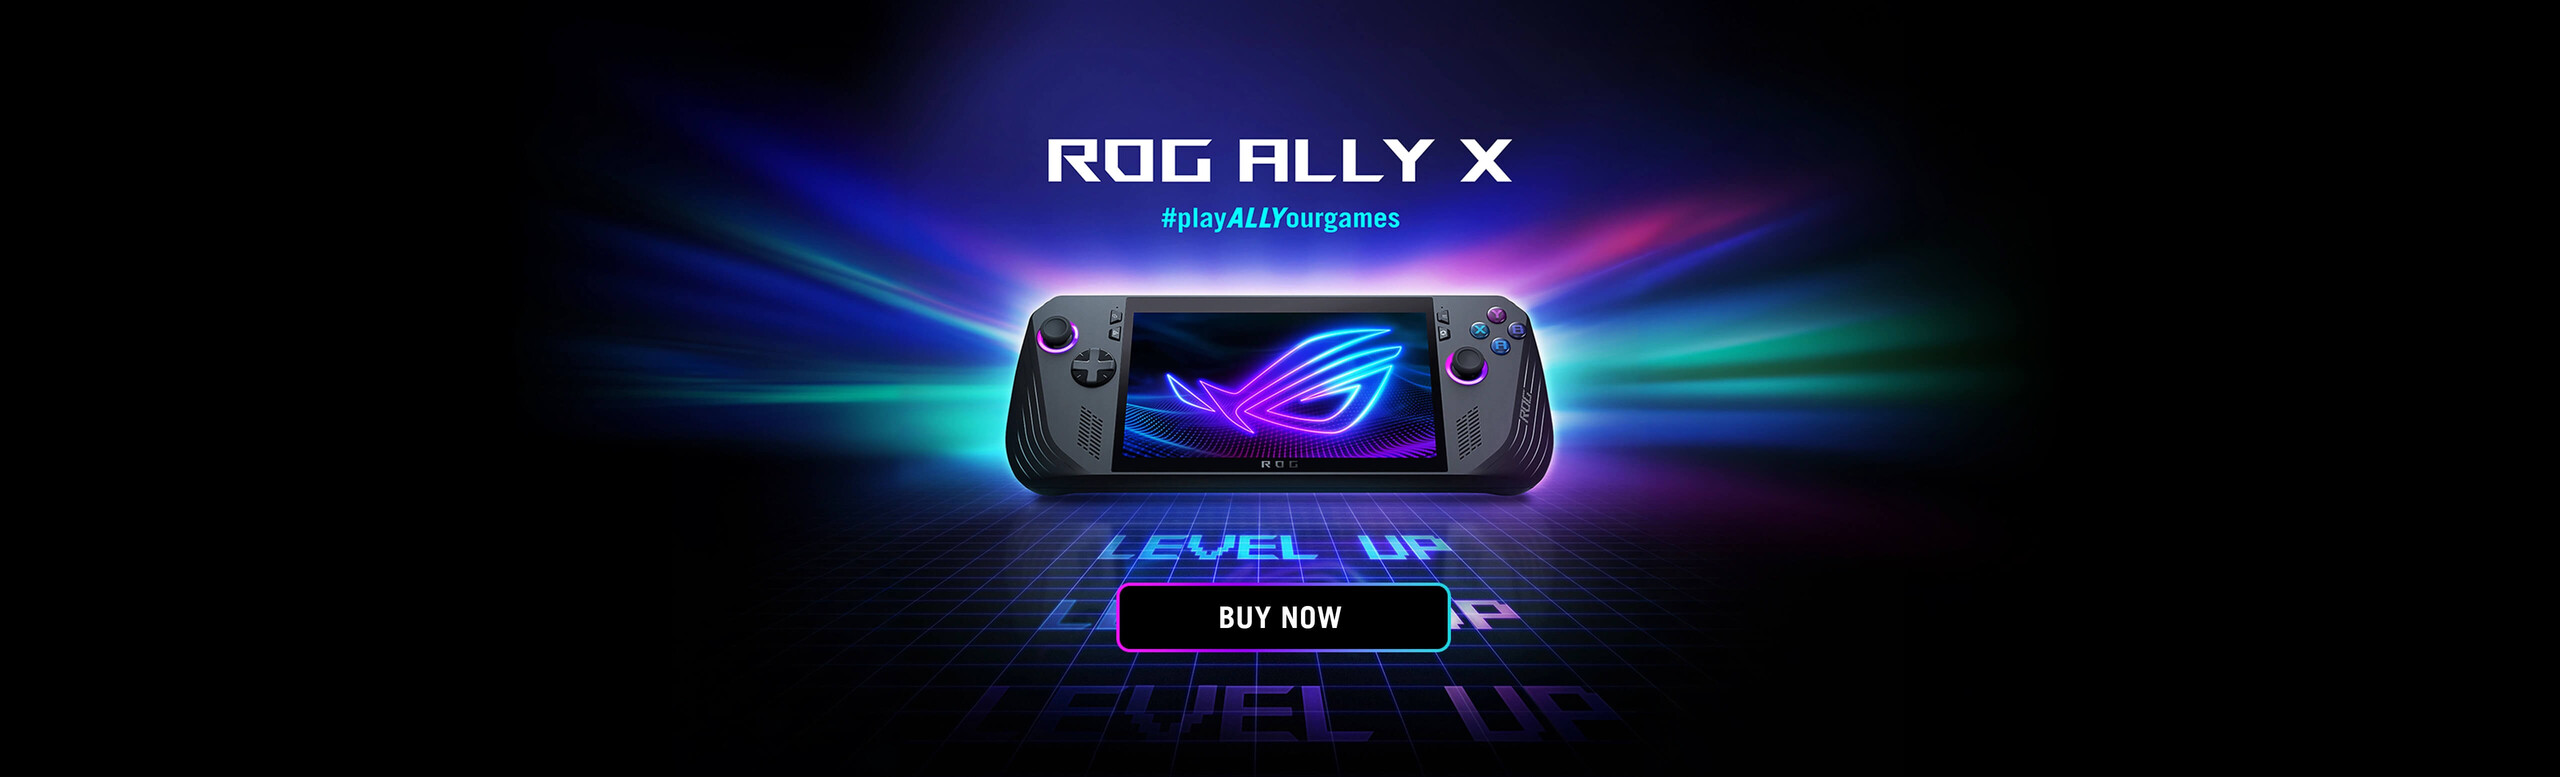 ROG Ally X Shop Now